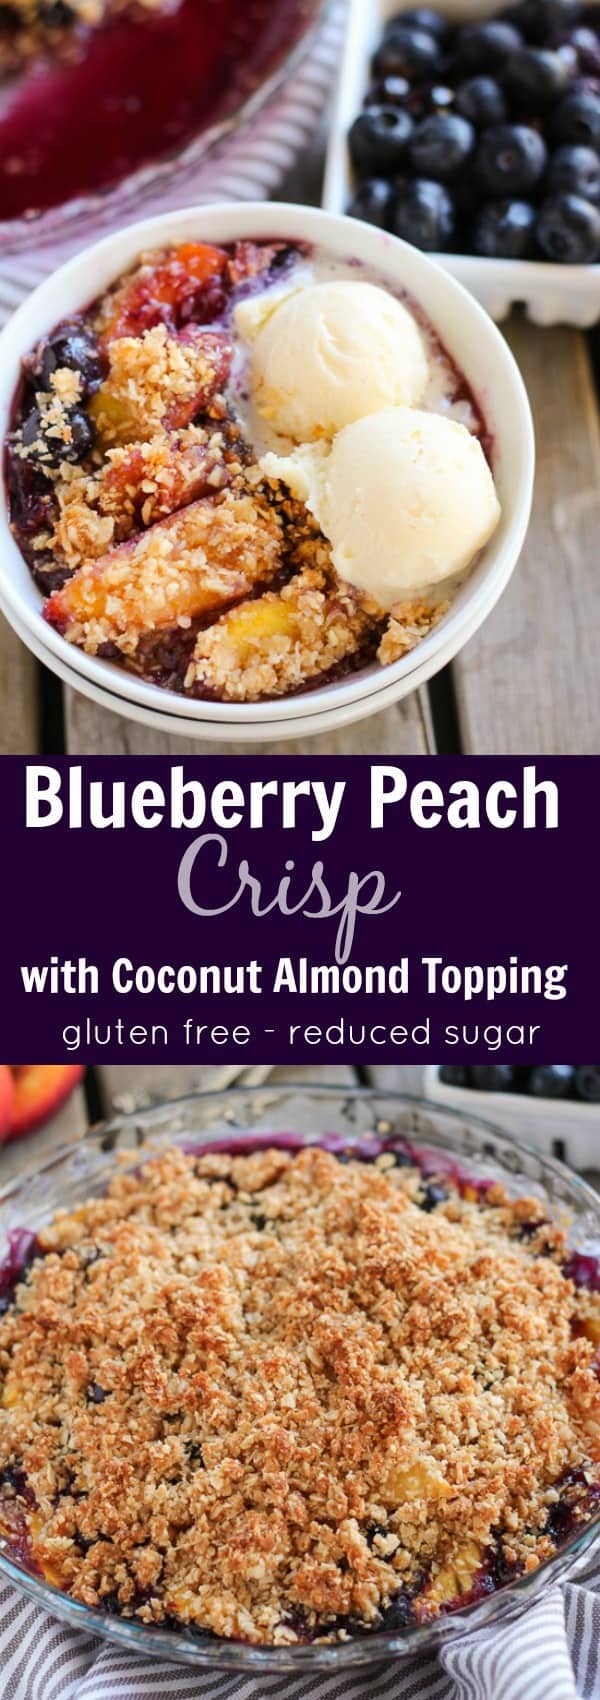 Blueberry peach crisp in a baking dish.